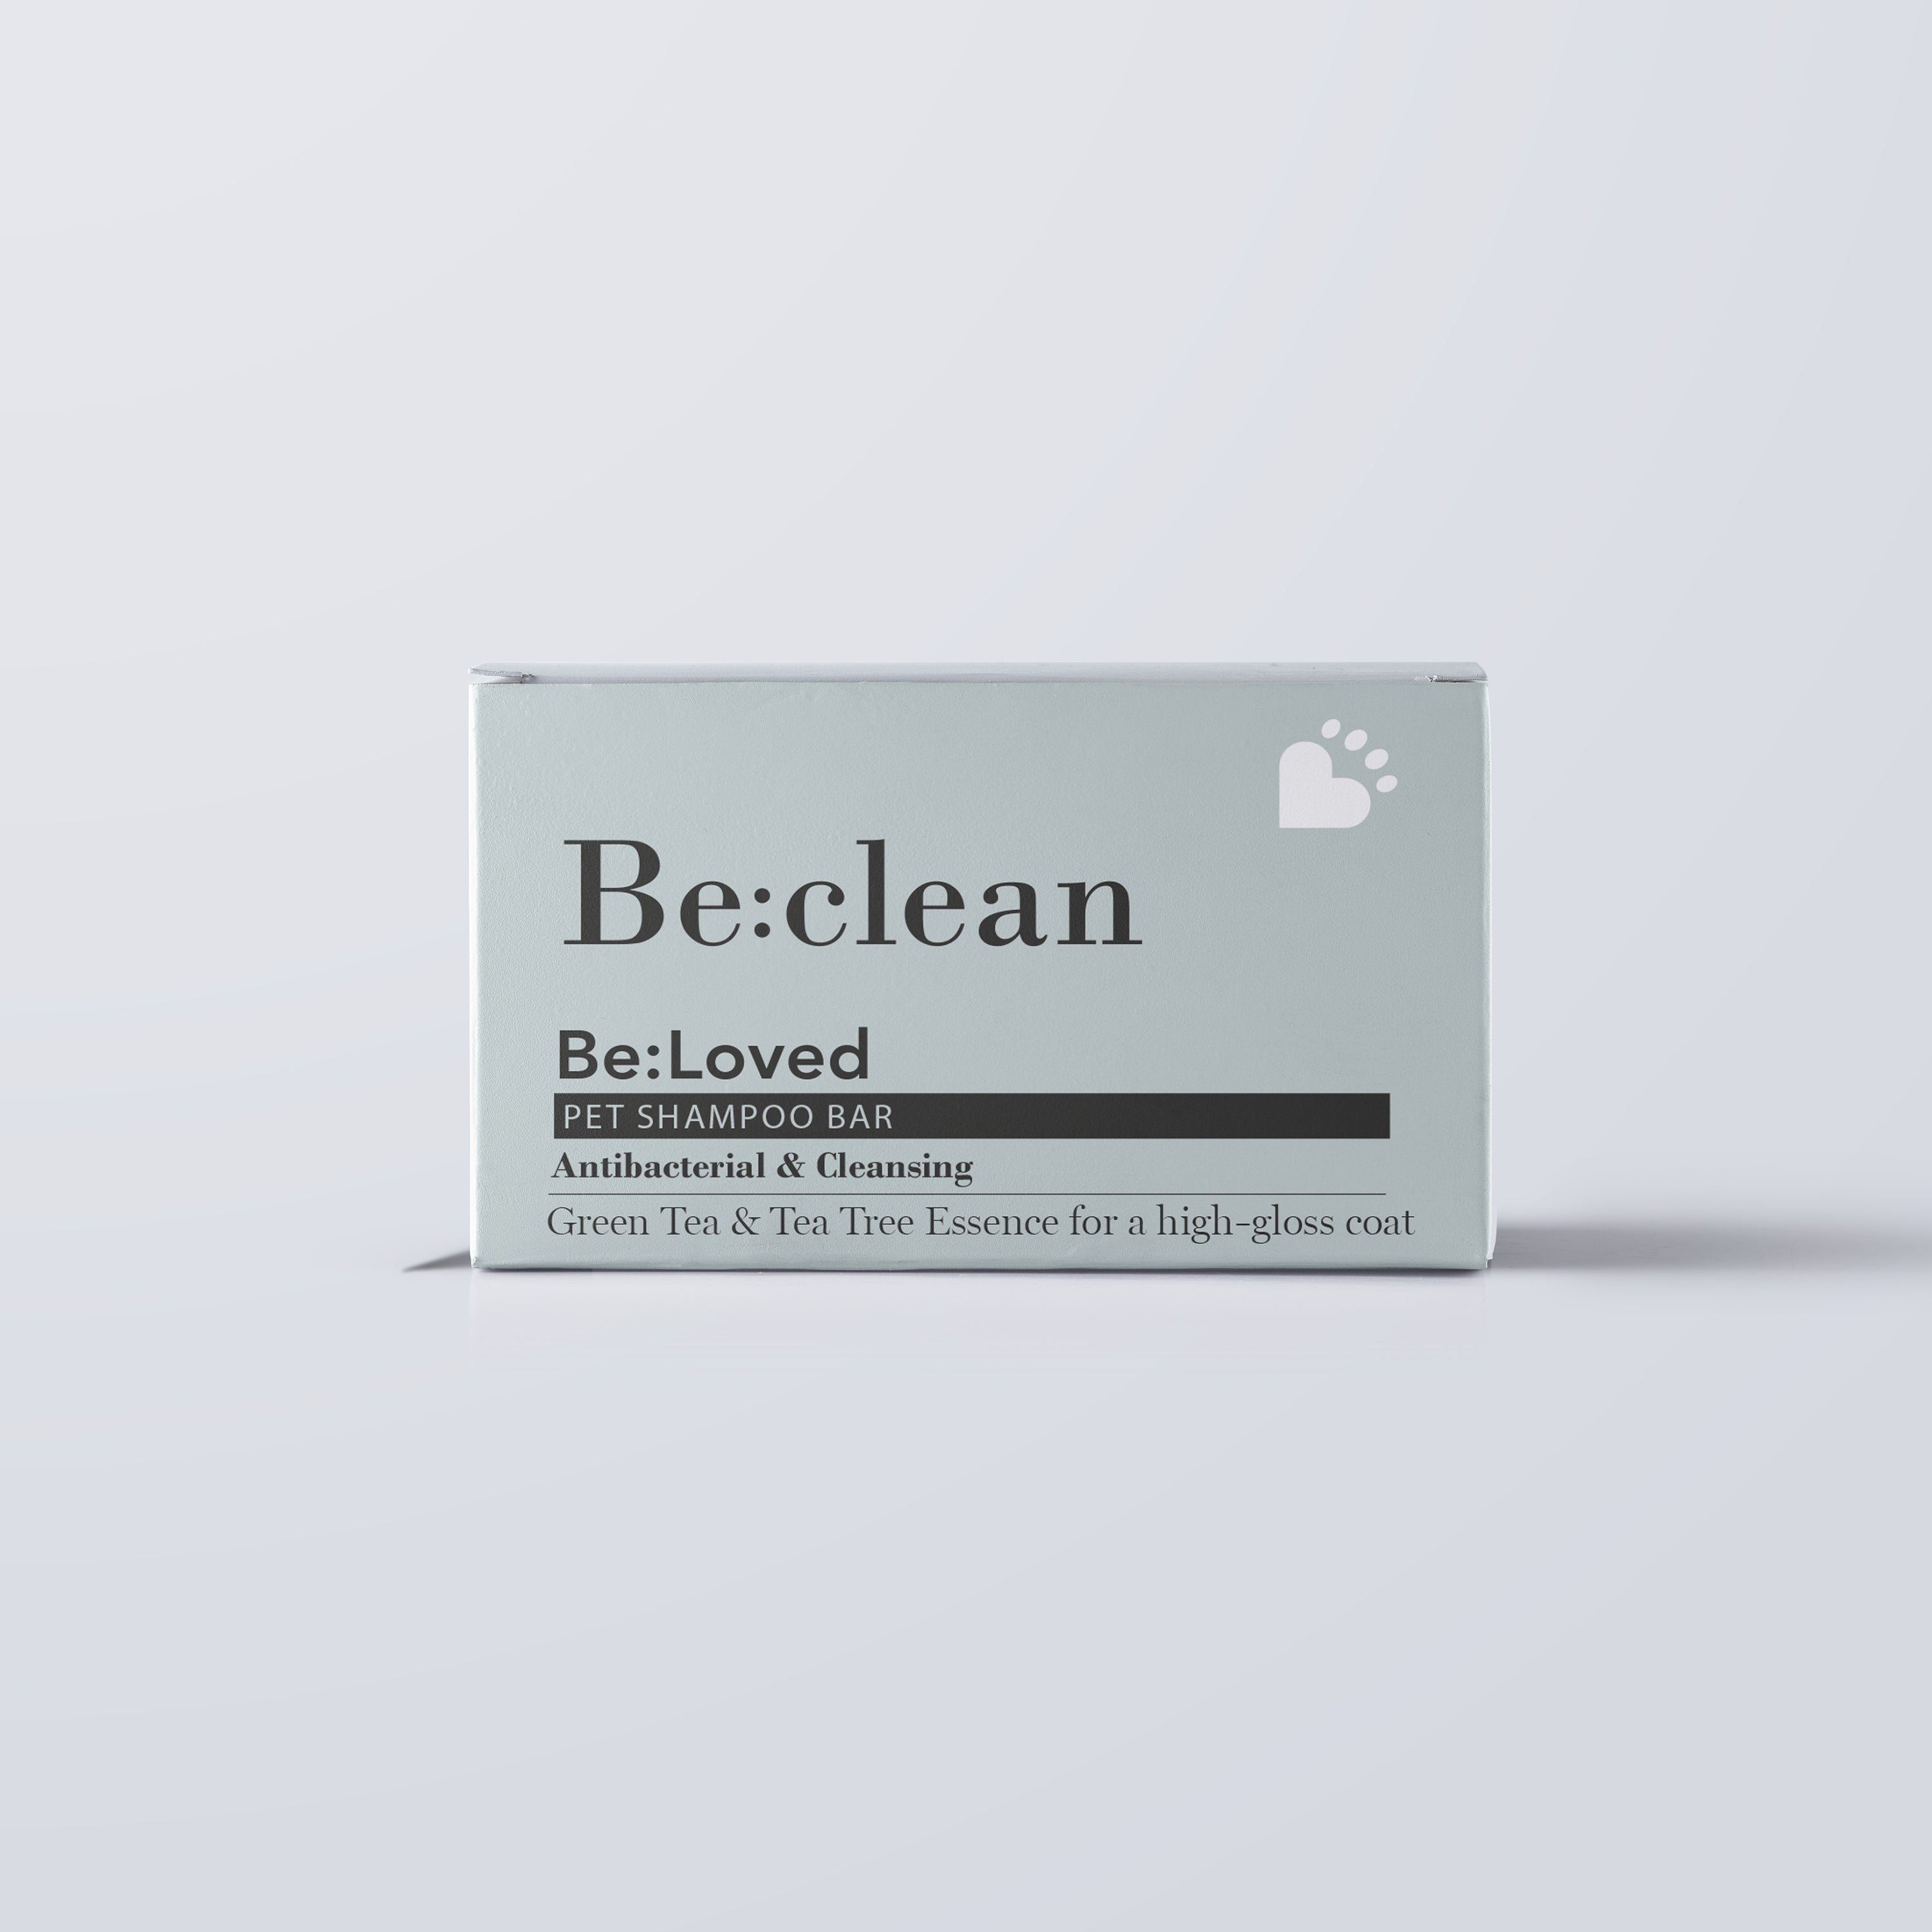 Be:clean pet shampoo bar packaging.